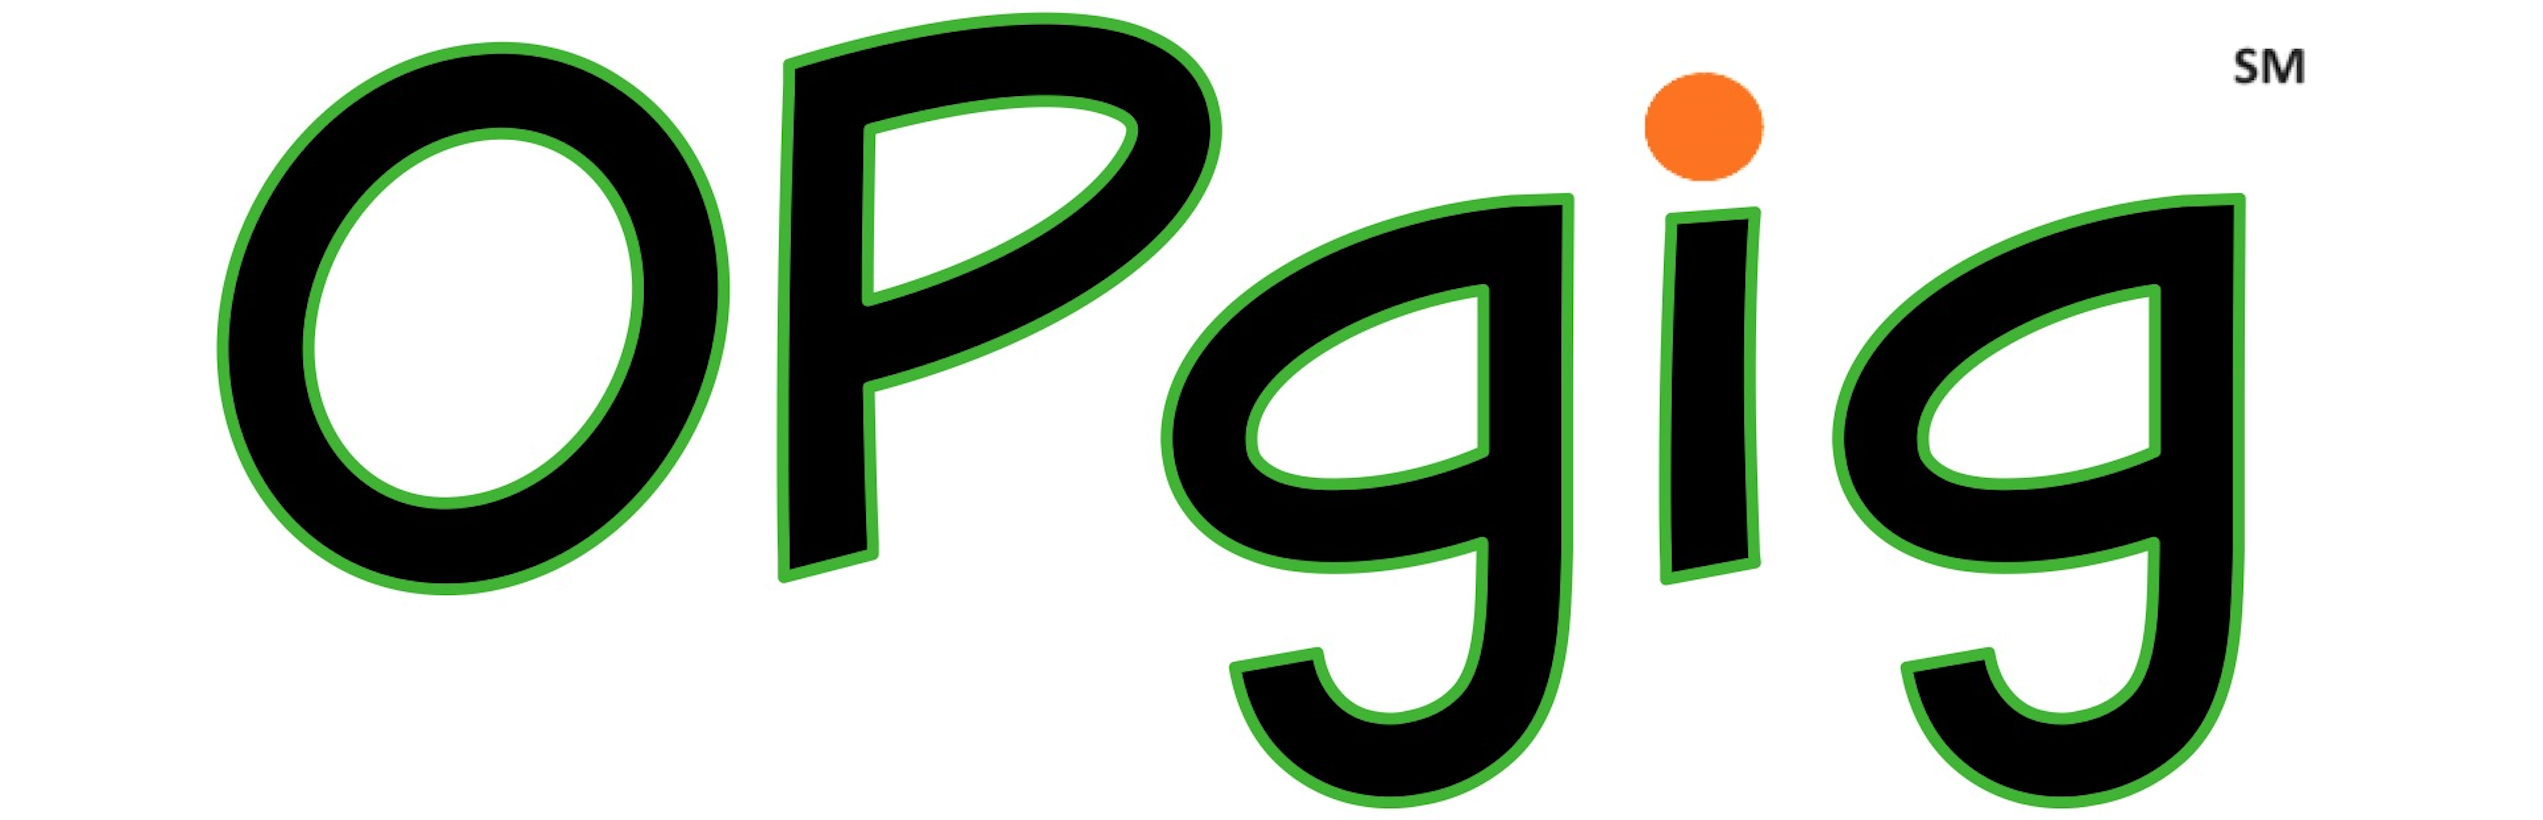 Opgig logo